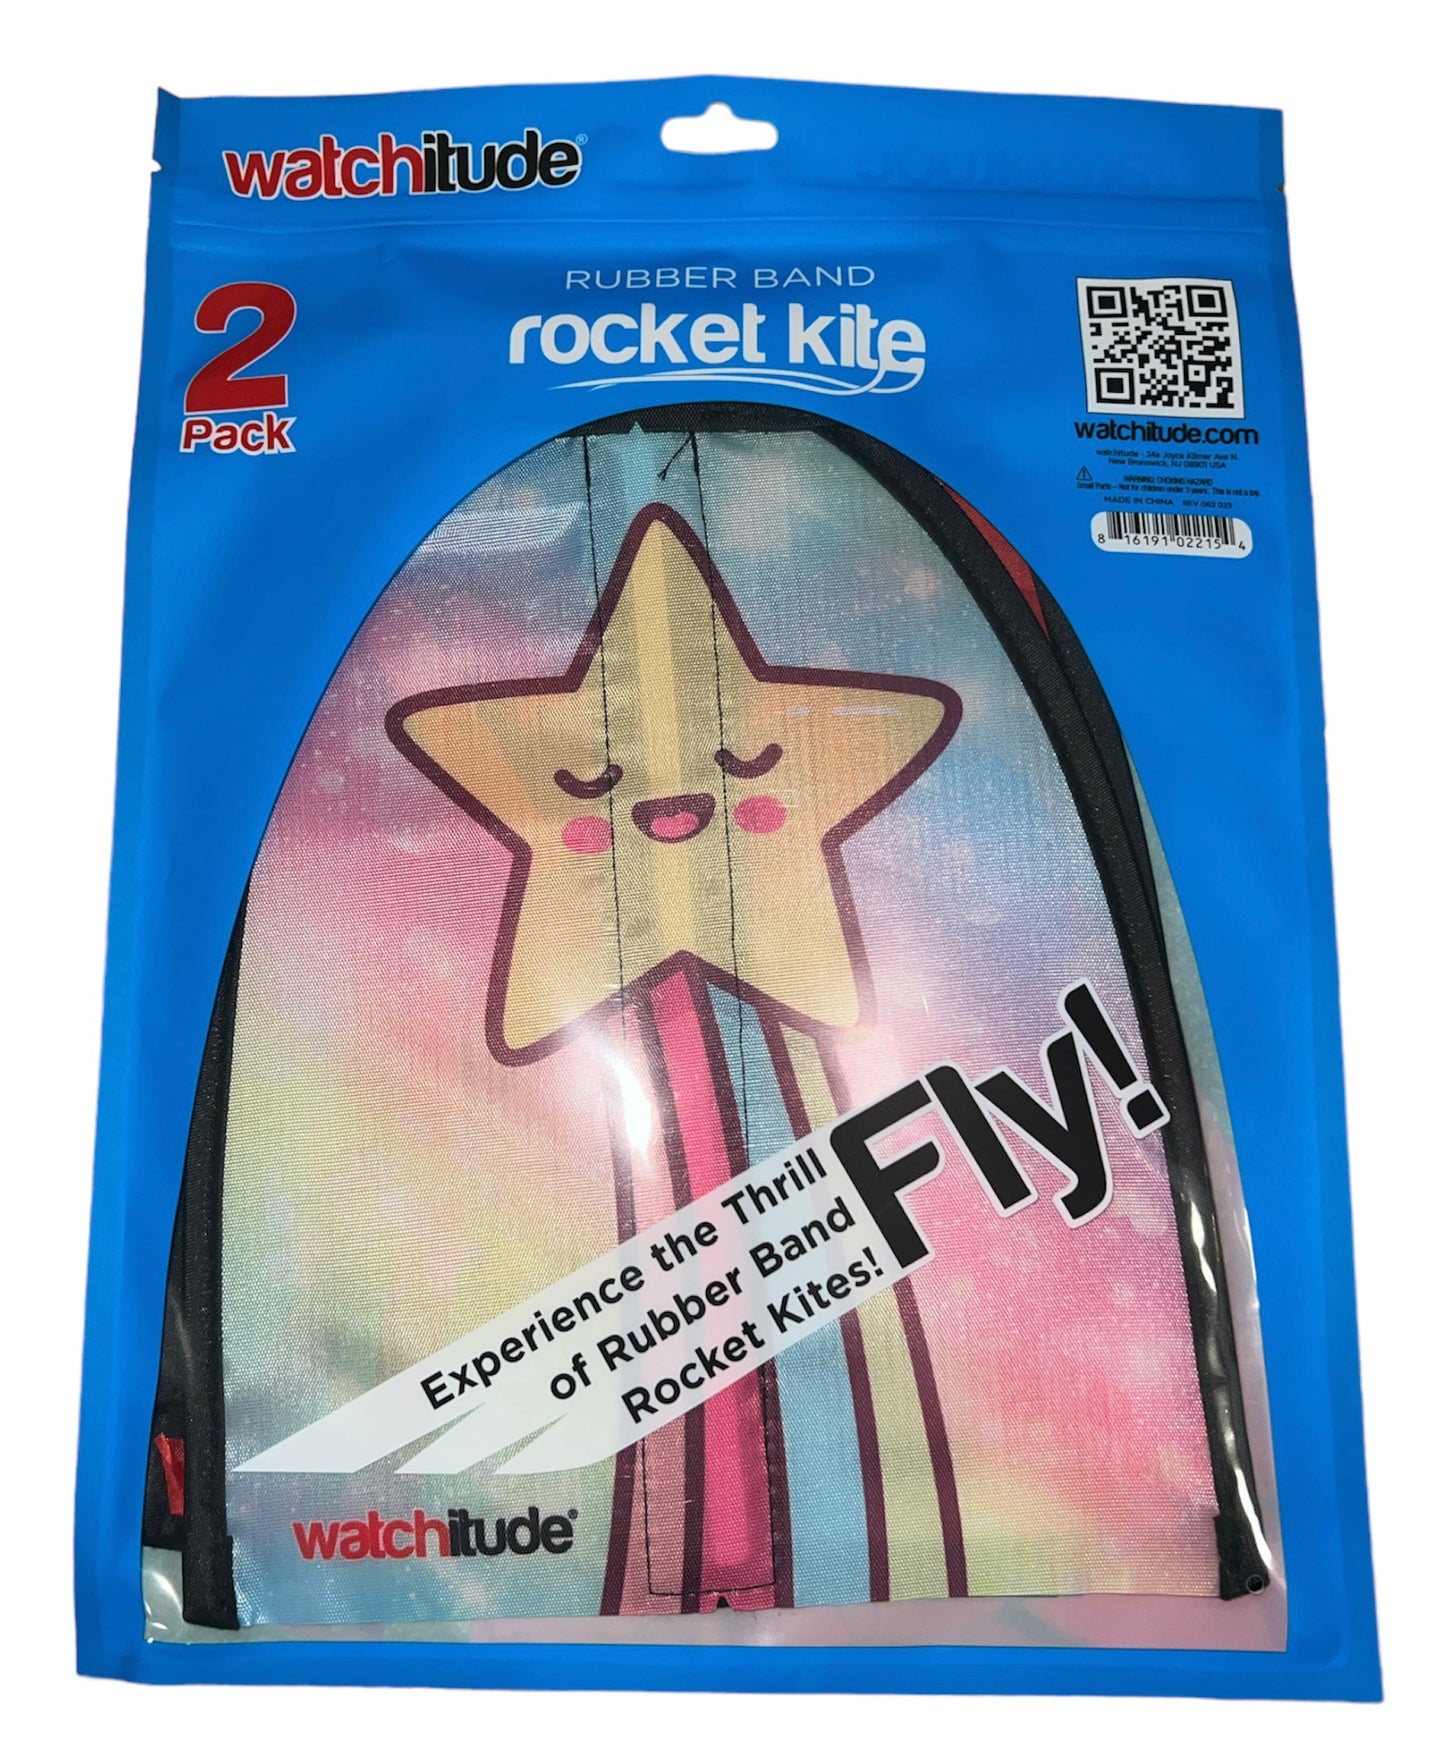 Watchitude Rubber Band Rocket Kite